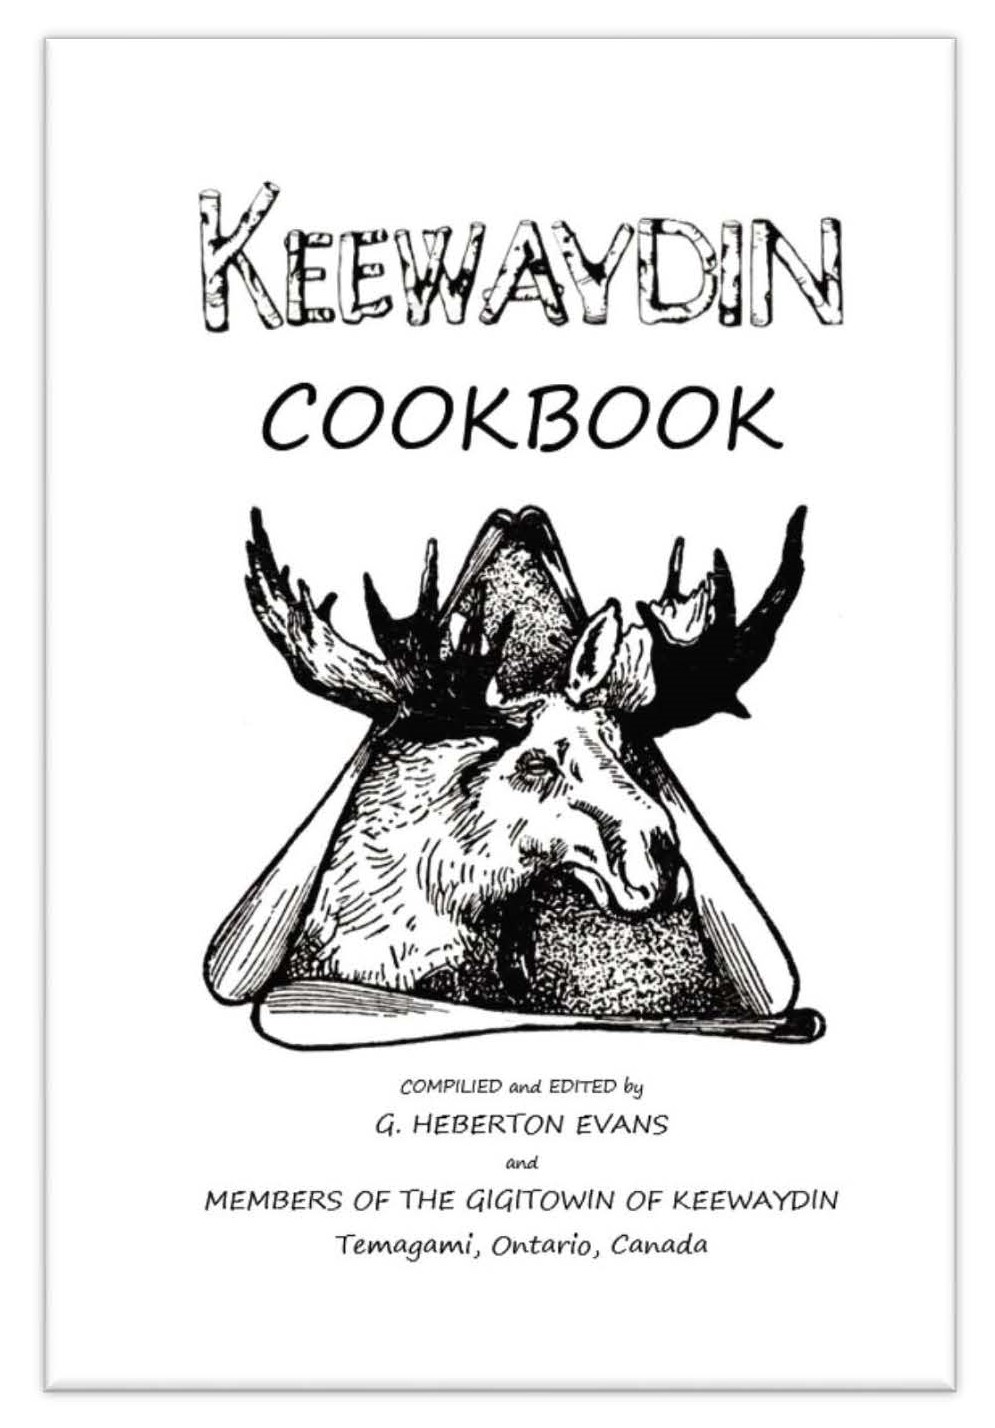 Keewaydin cookbook cover trimmed Keewaydin